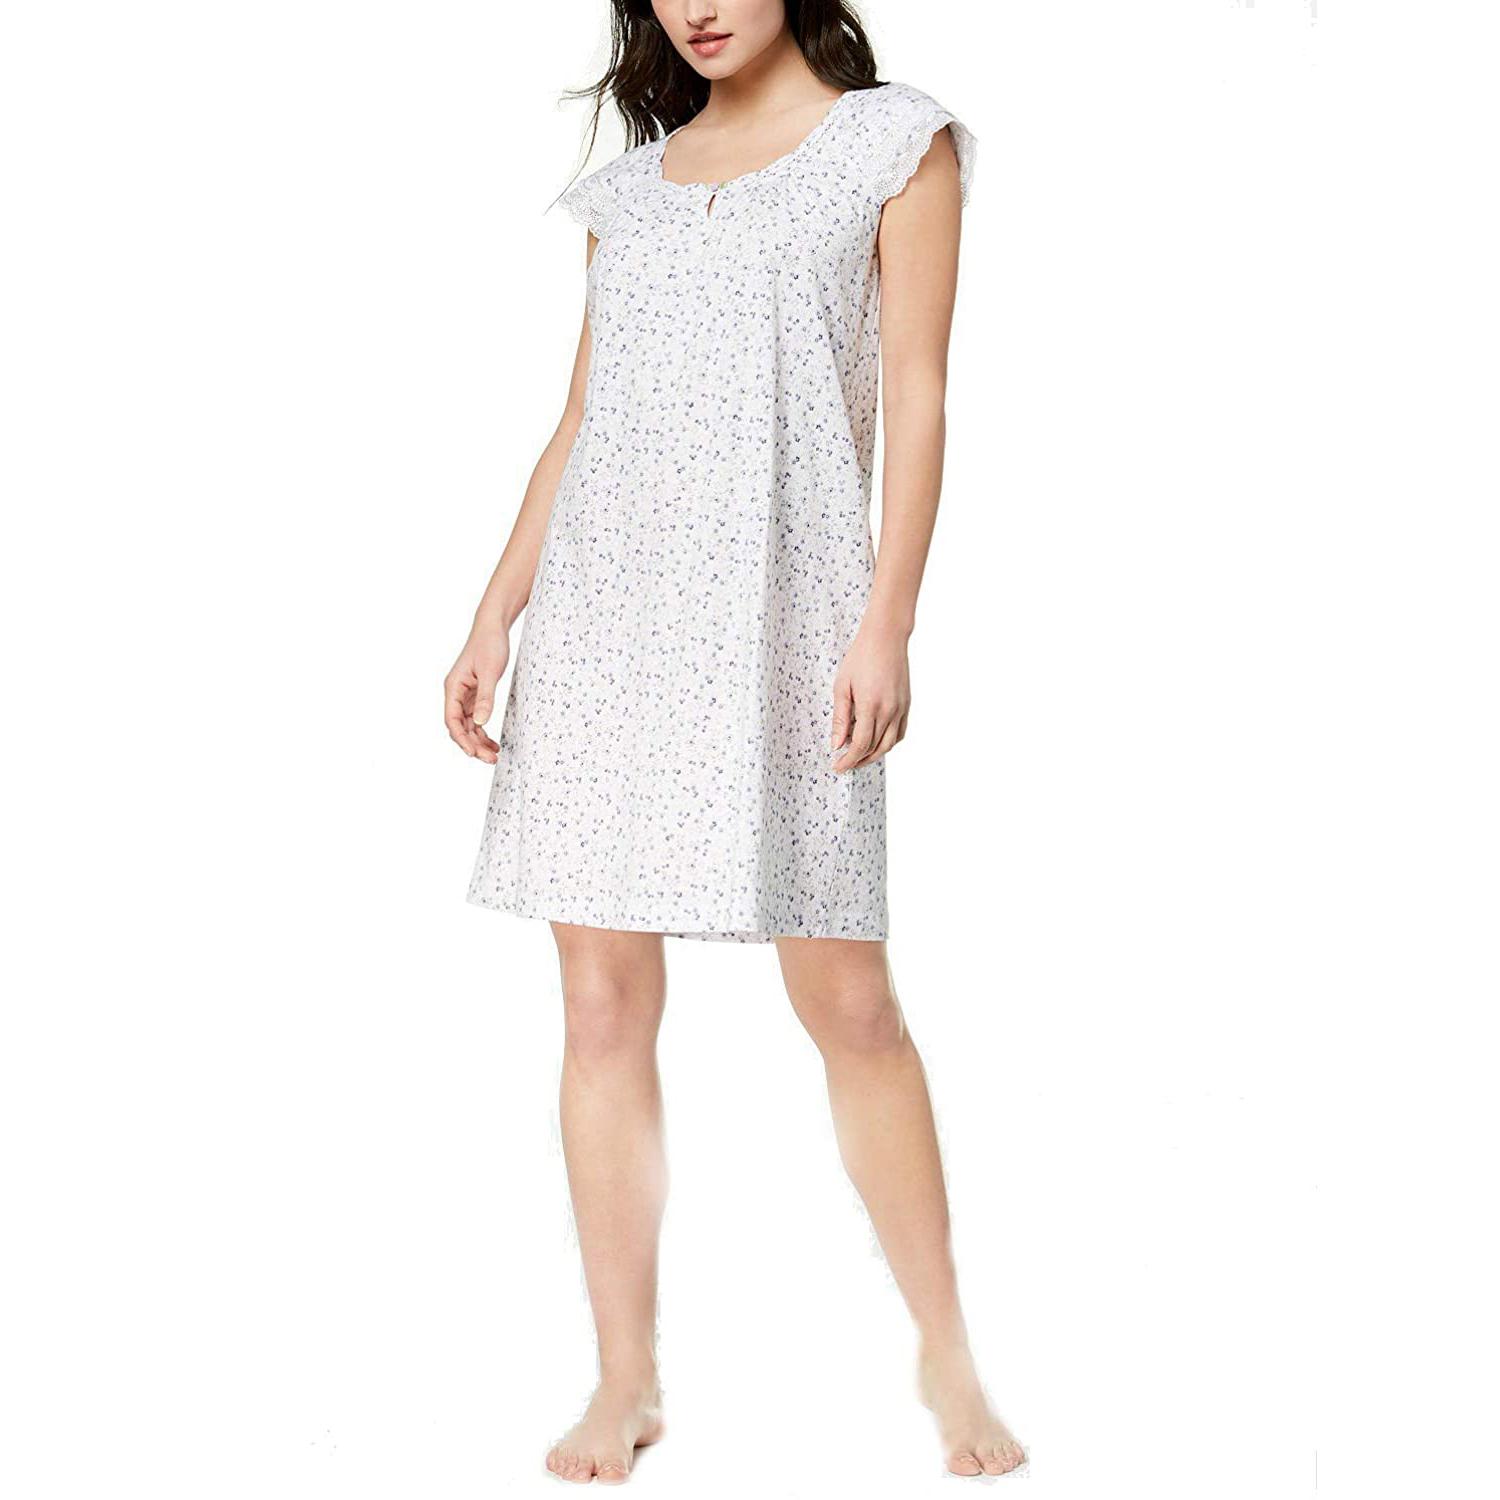 Charter Club Cotton Sleeveless Sleep Shirt Nightgown for $9.99